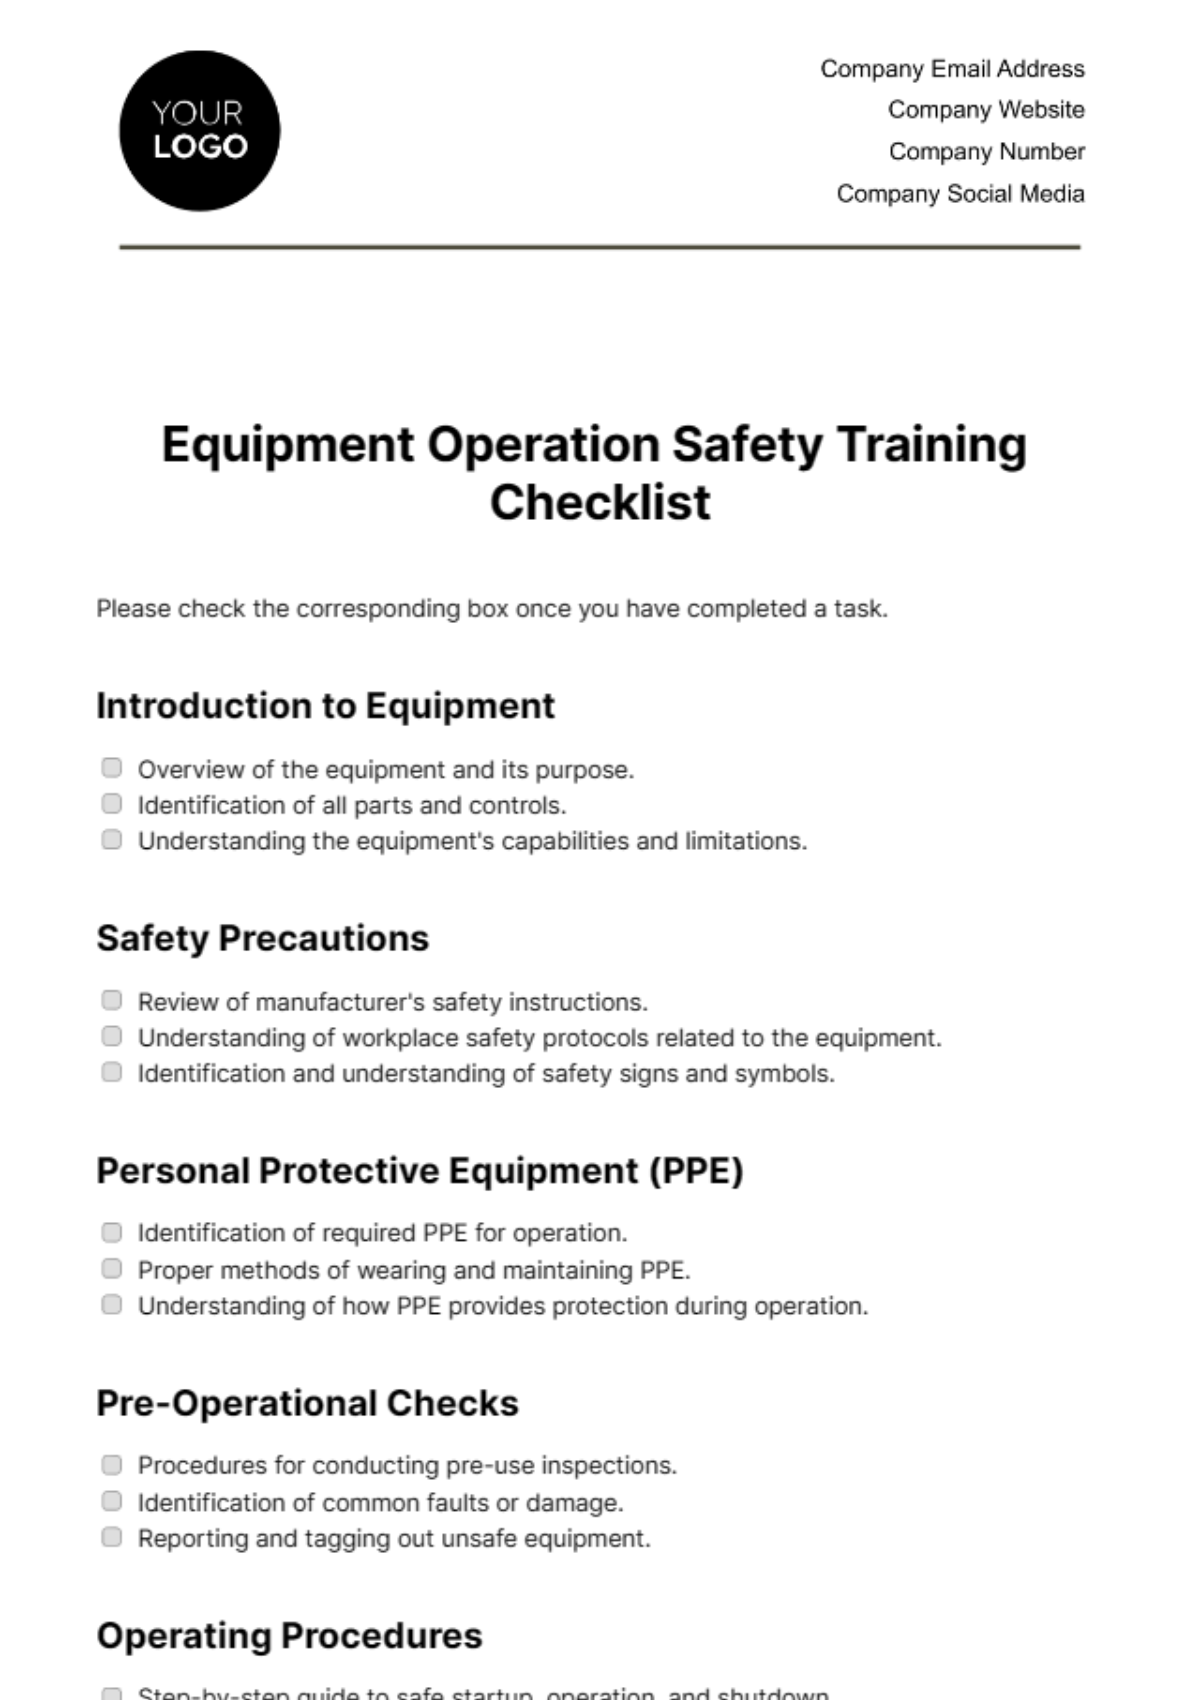 Equipment Operation Safety Training Checklist Template